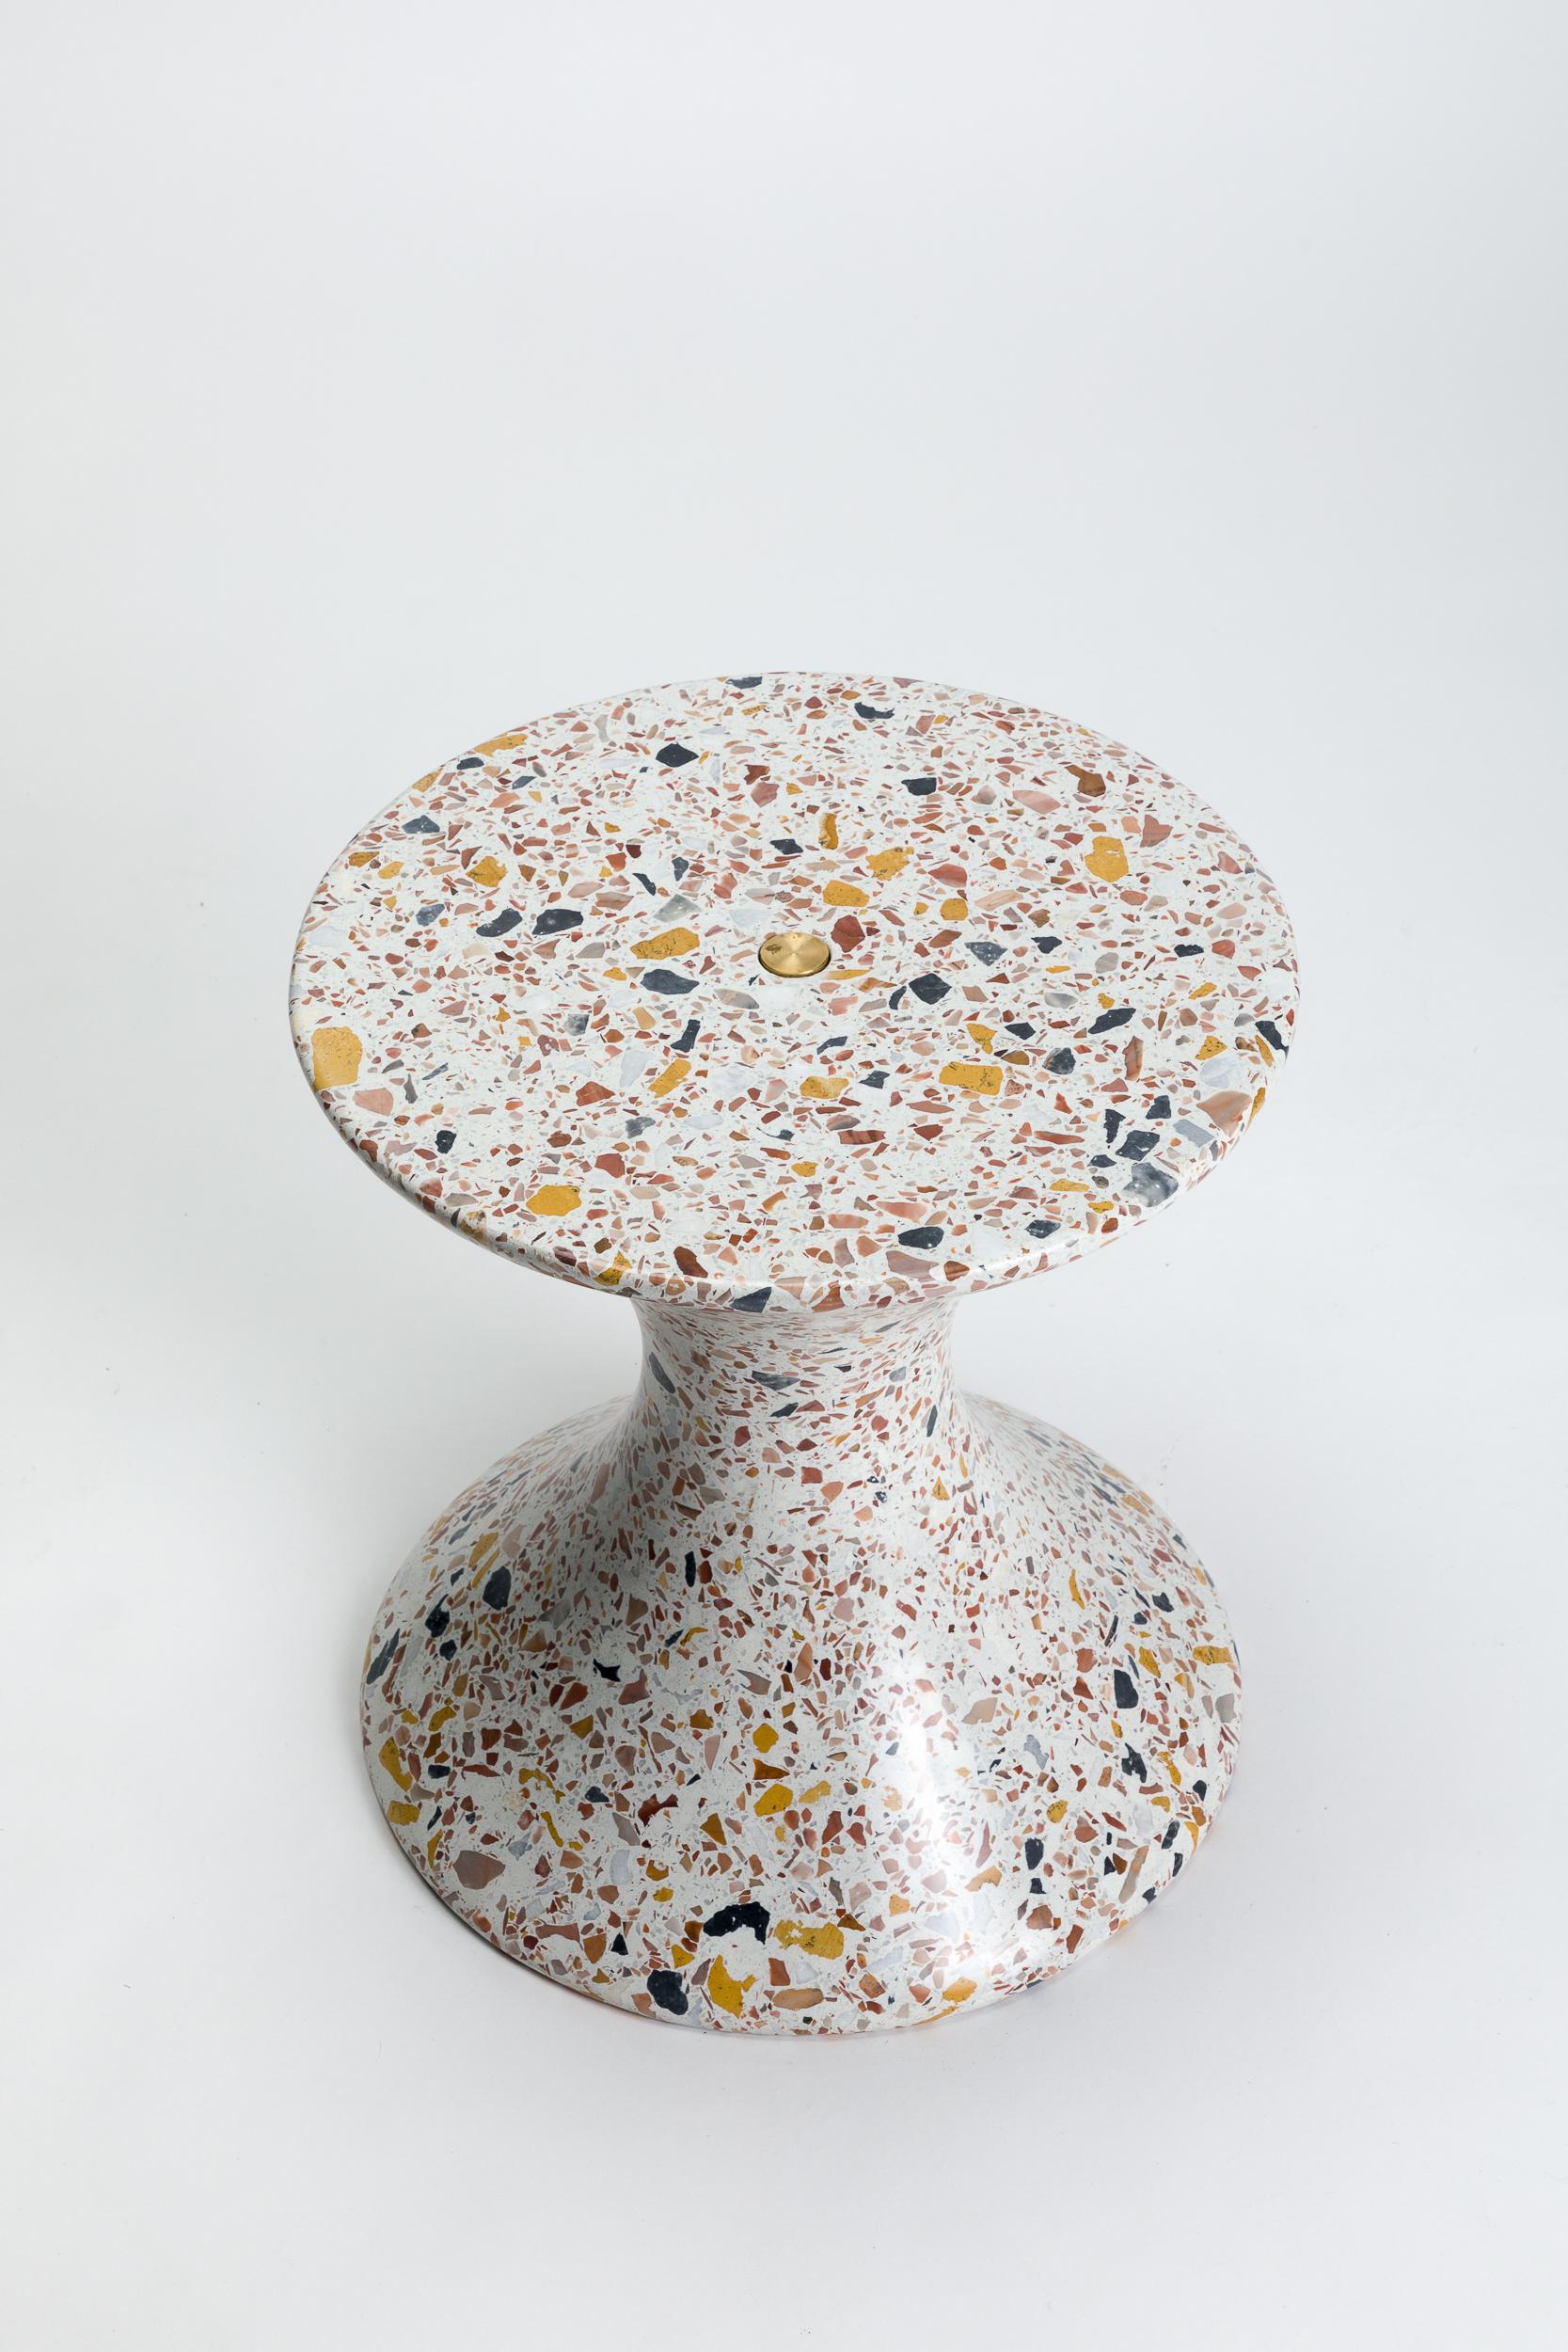 American Confetti, Small Contemporary Indoor/Outdoor Terrazzo Side Table by Laun